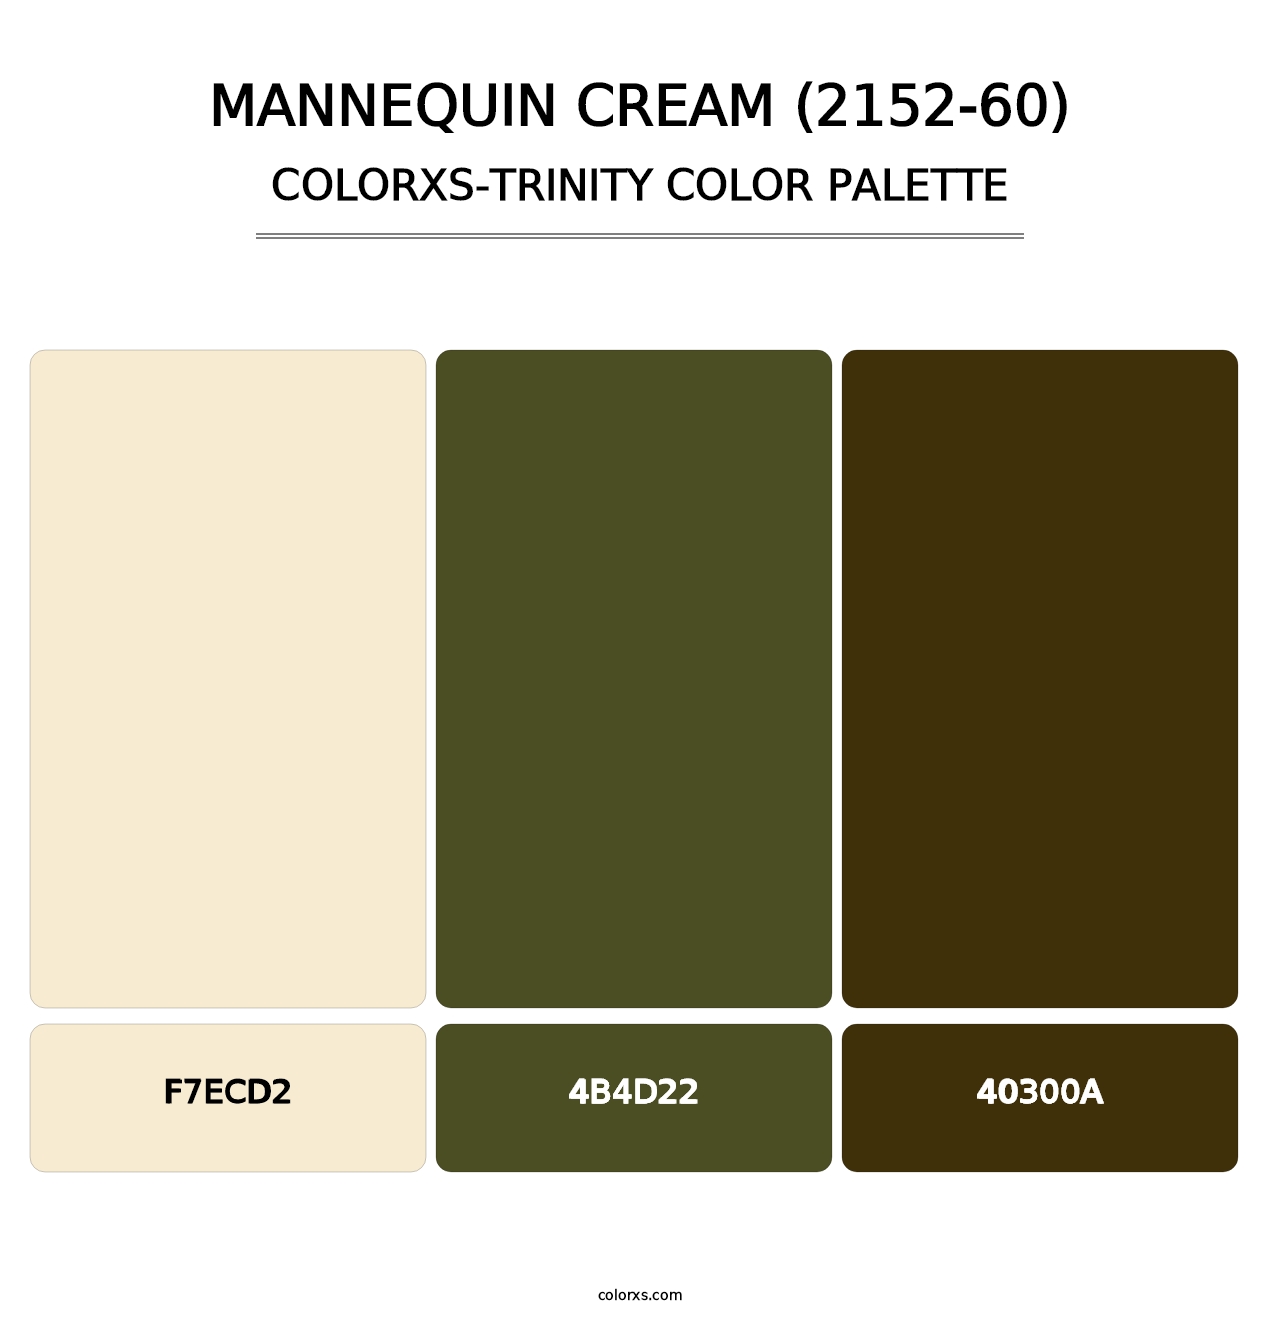 Mannequin Cream (2152-60) - Colorxs Trinity Palette